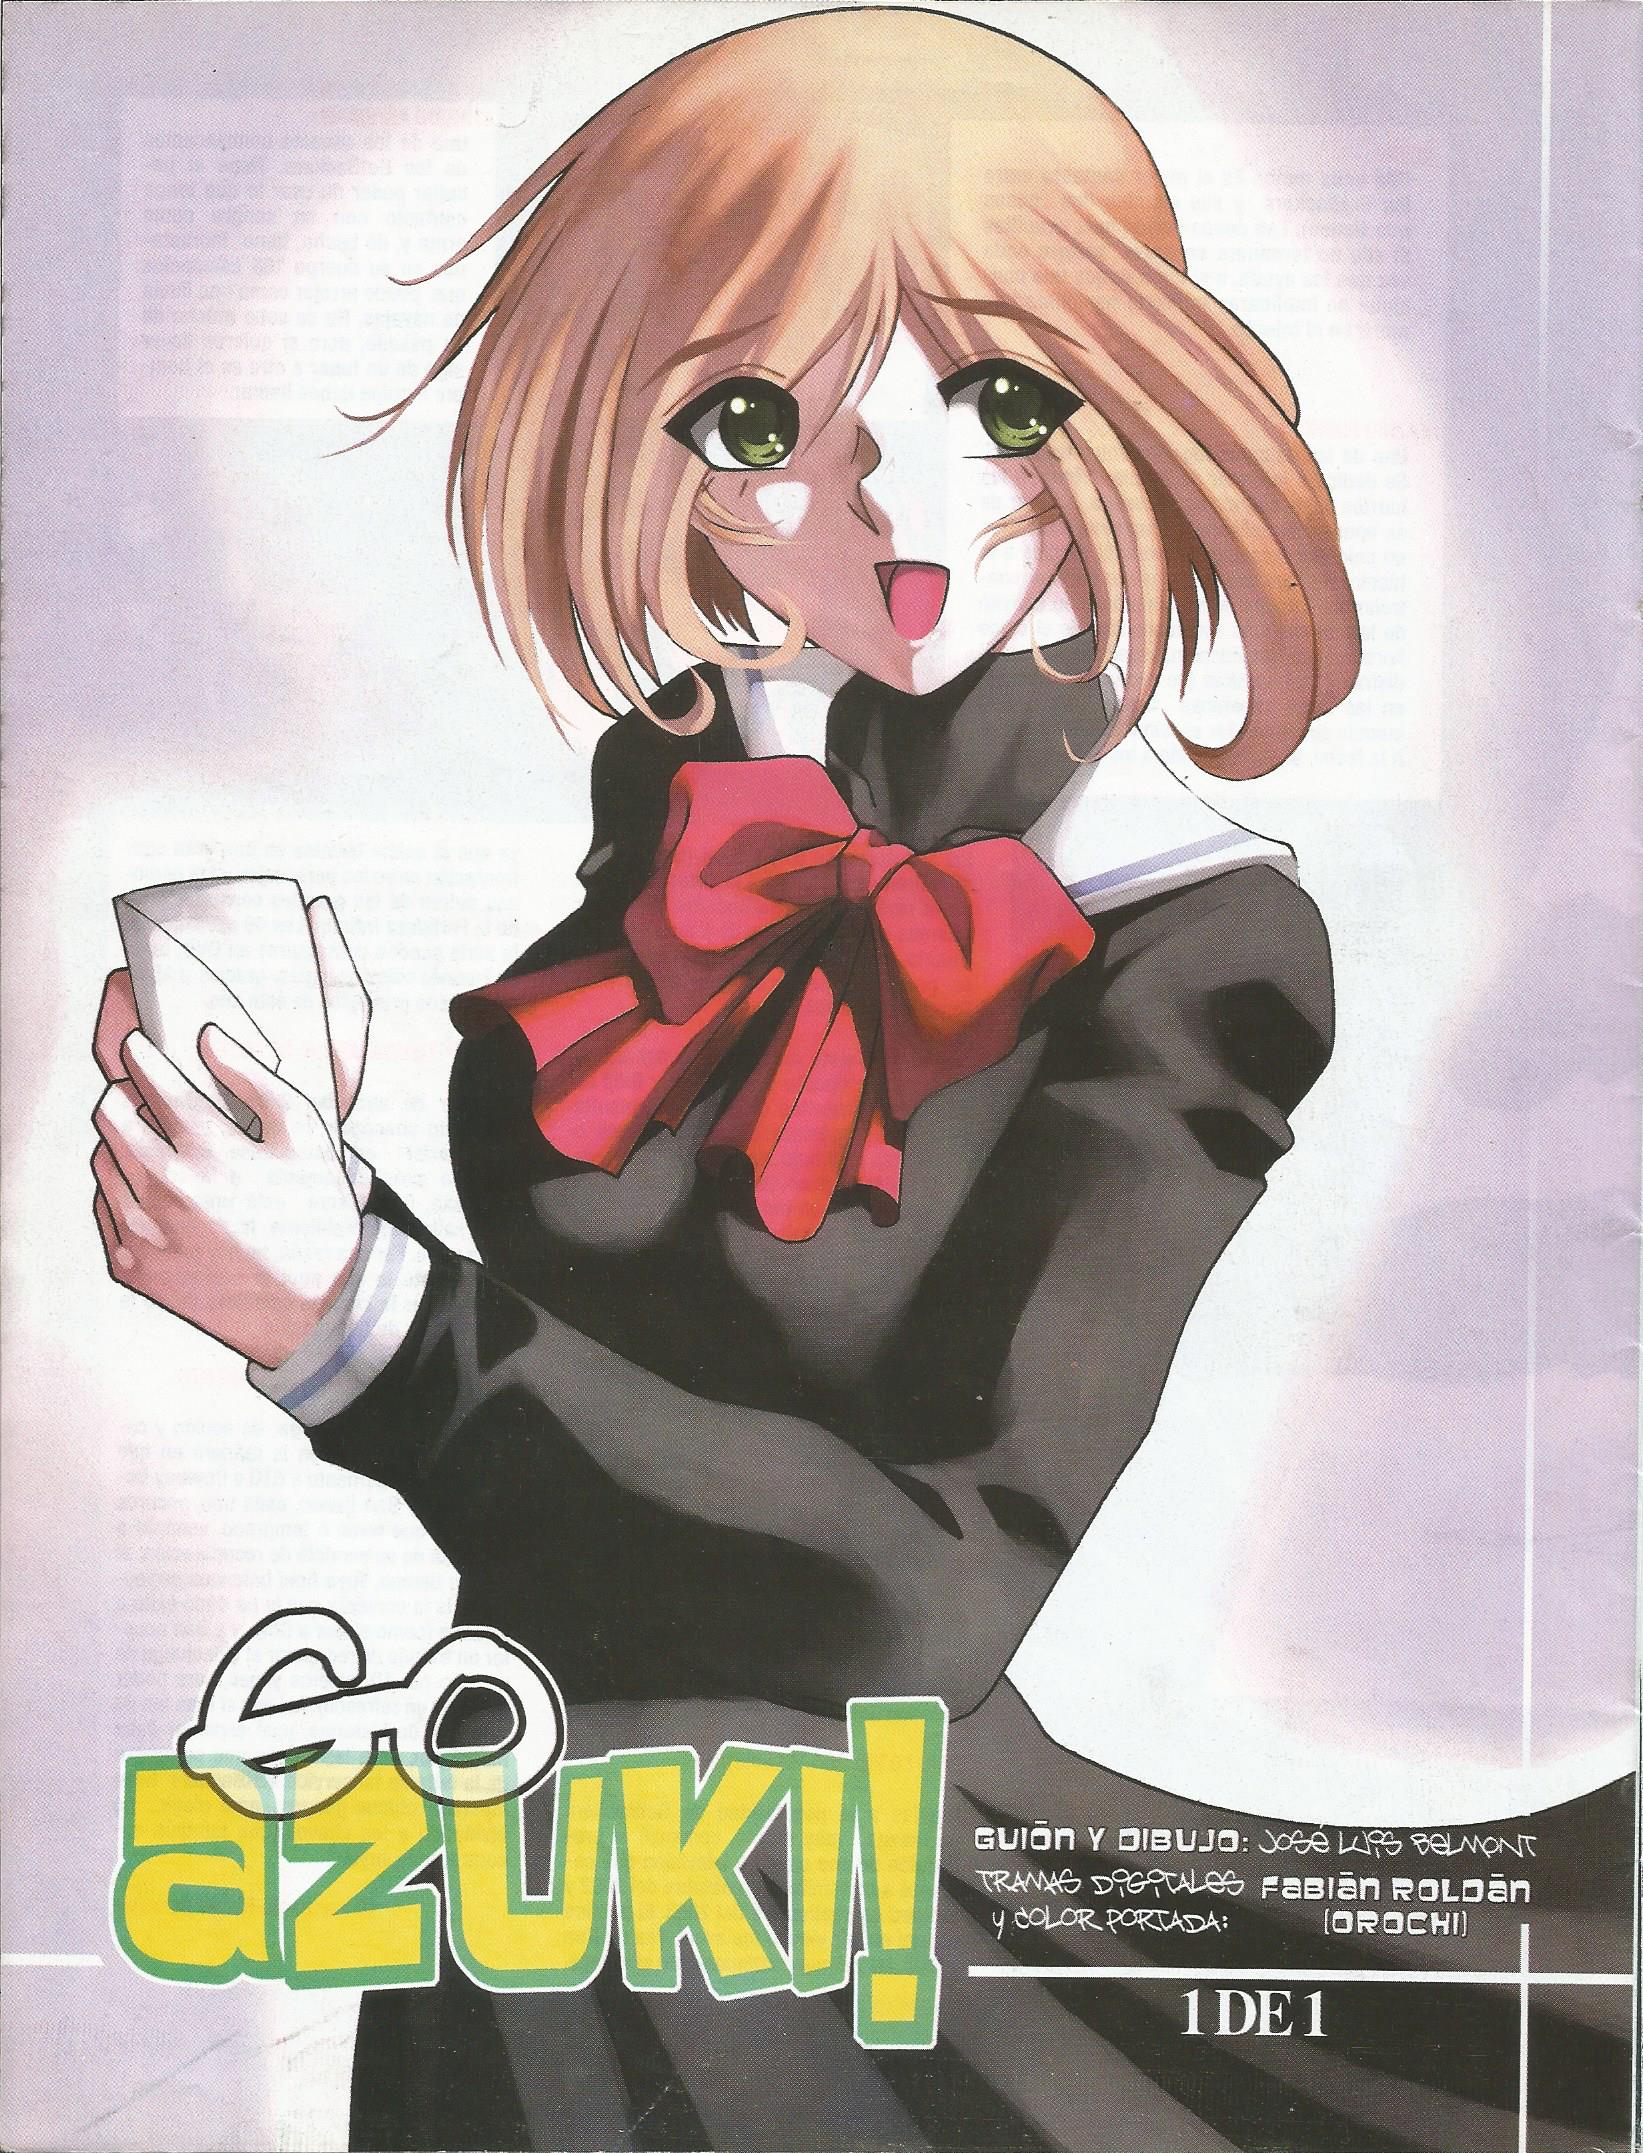 Conexion Manga #112 - Go Azuki! Cover by UnlimitedPotential on DeviantArt